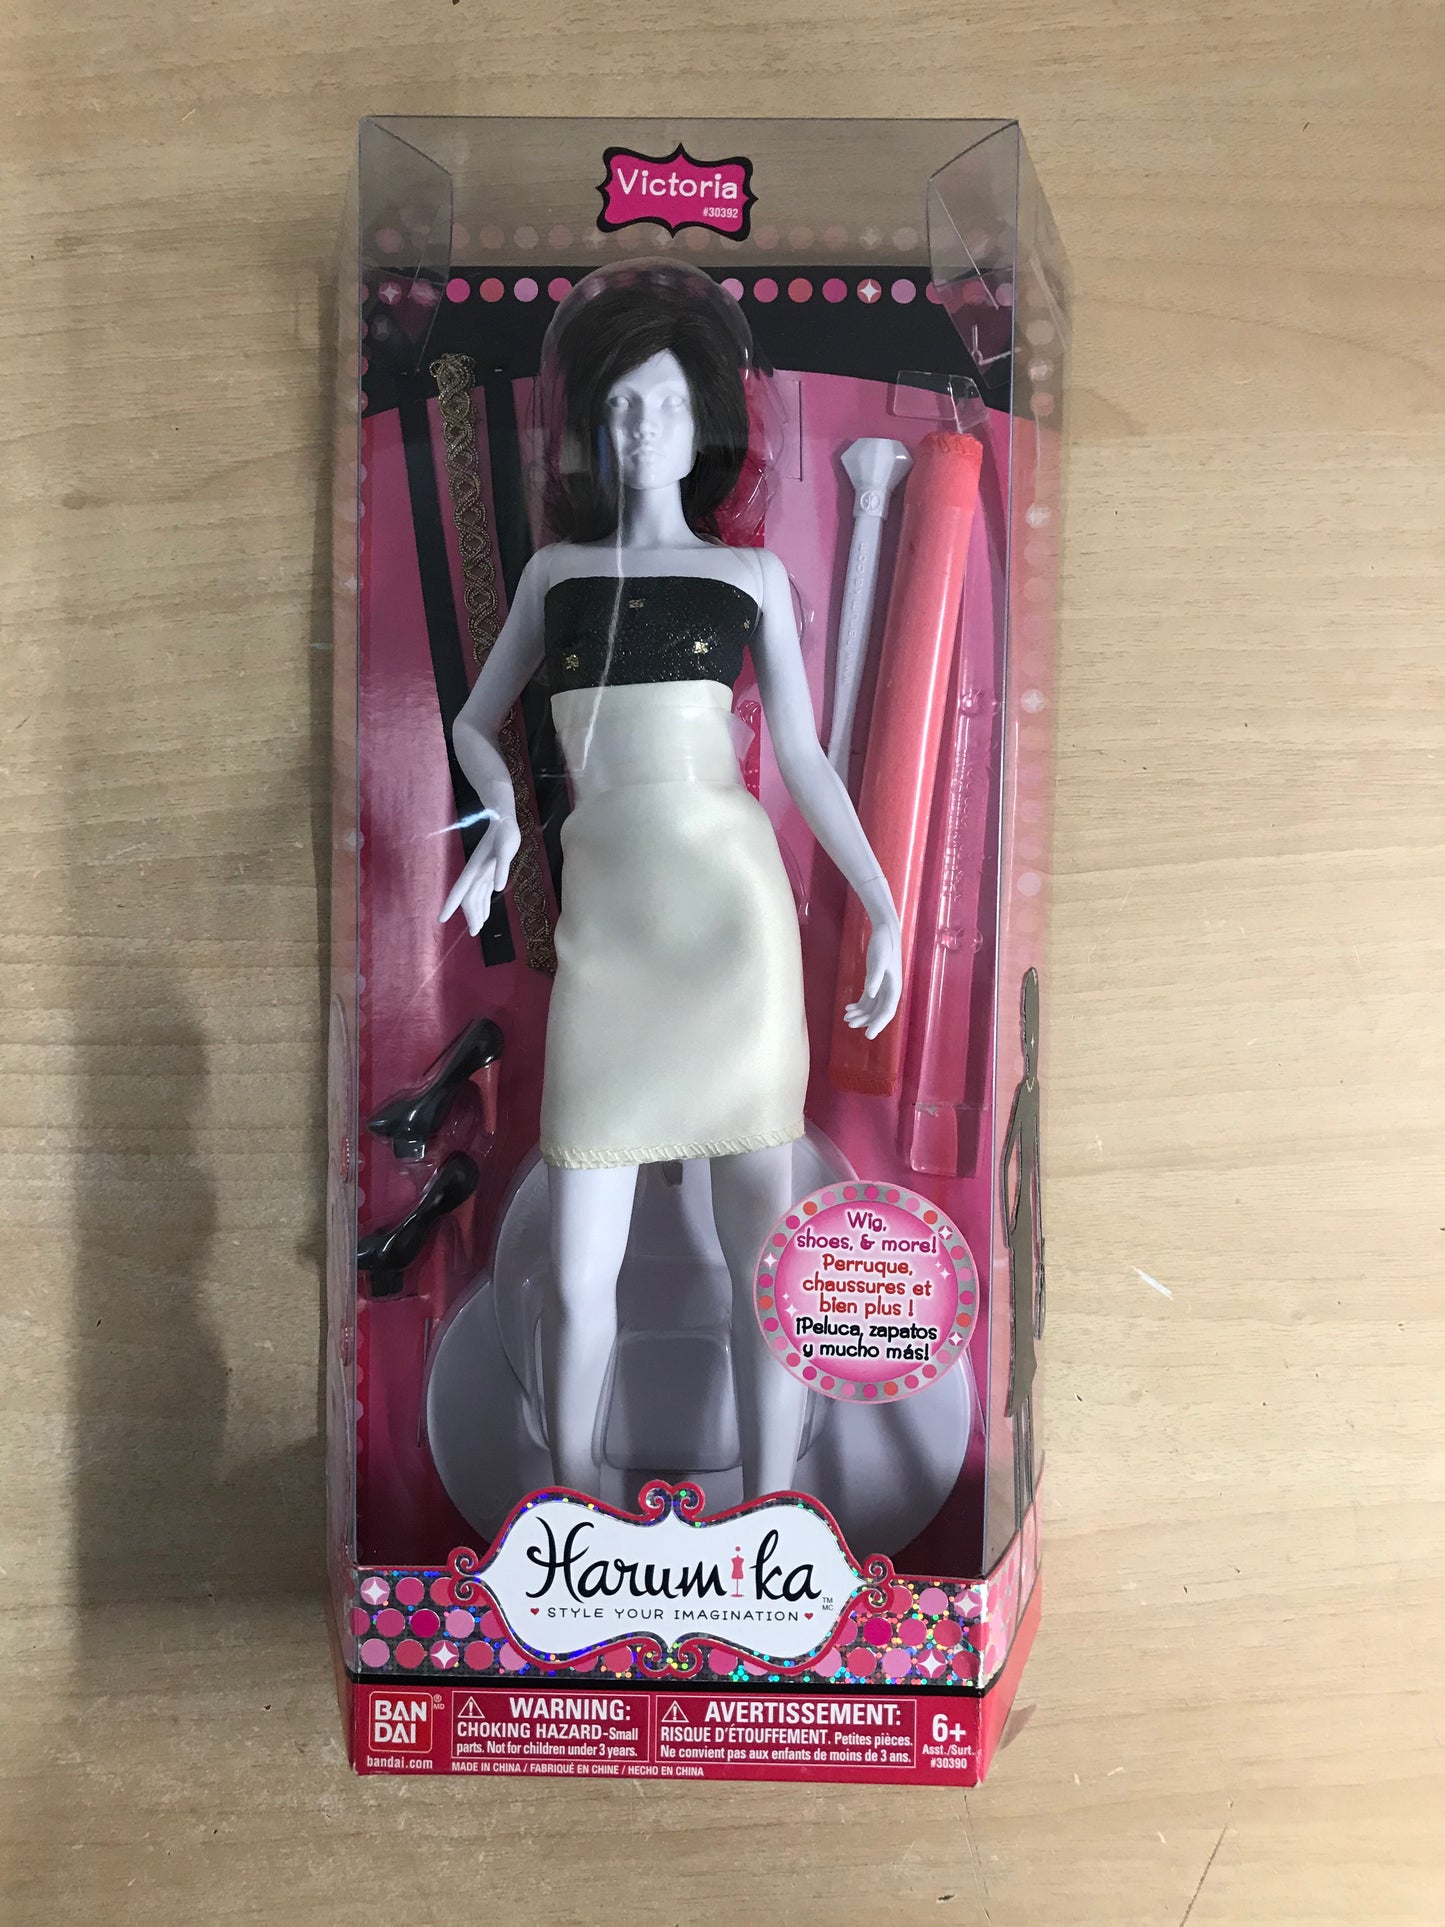 Harumika Mannequin Doll Bandai 12 inch Victoria 2010 NEW IN BOX